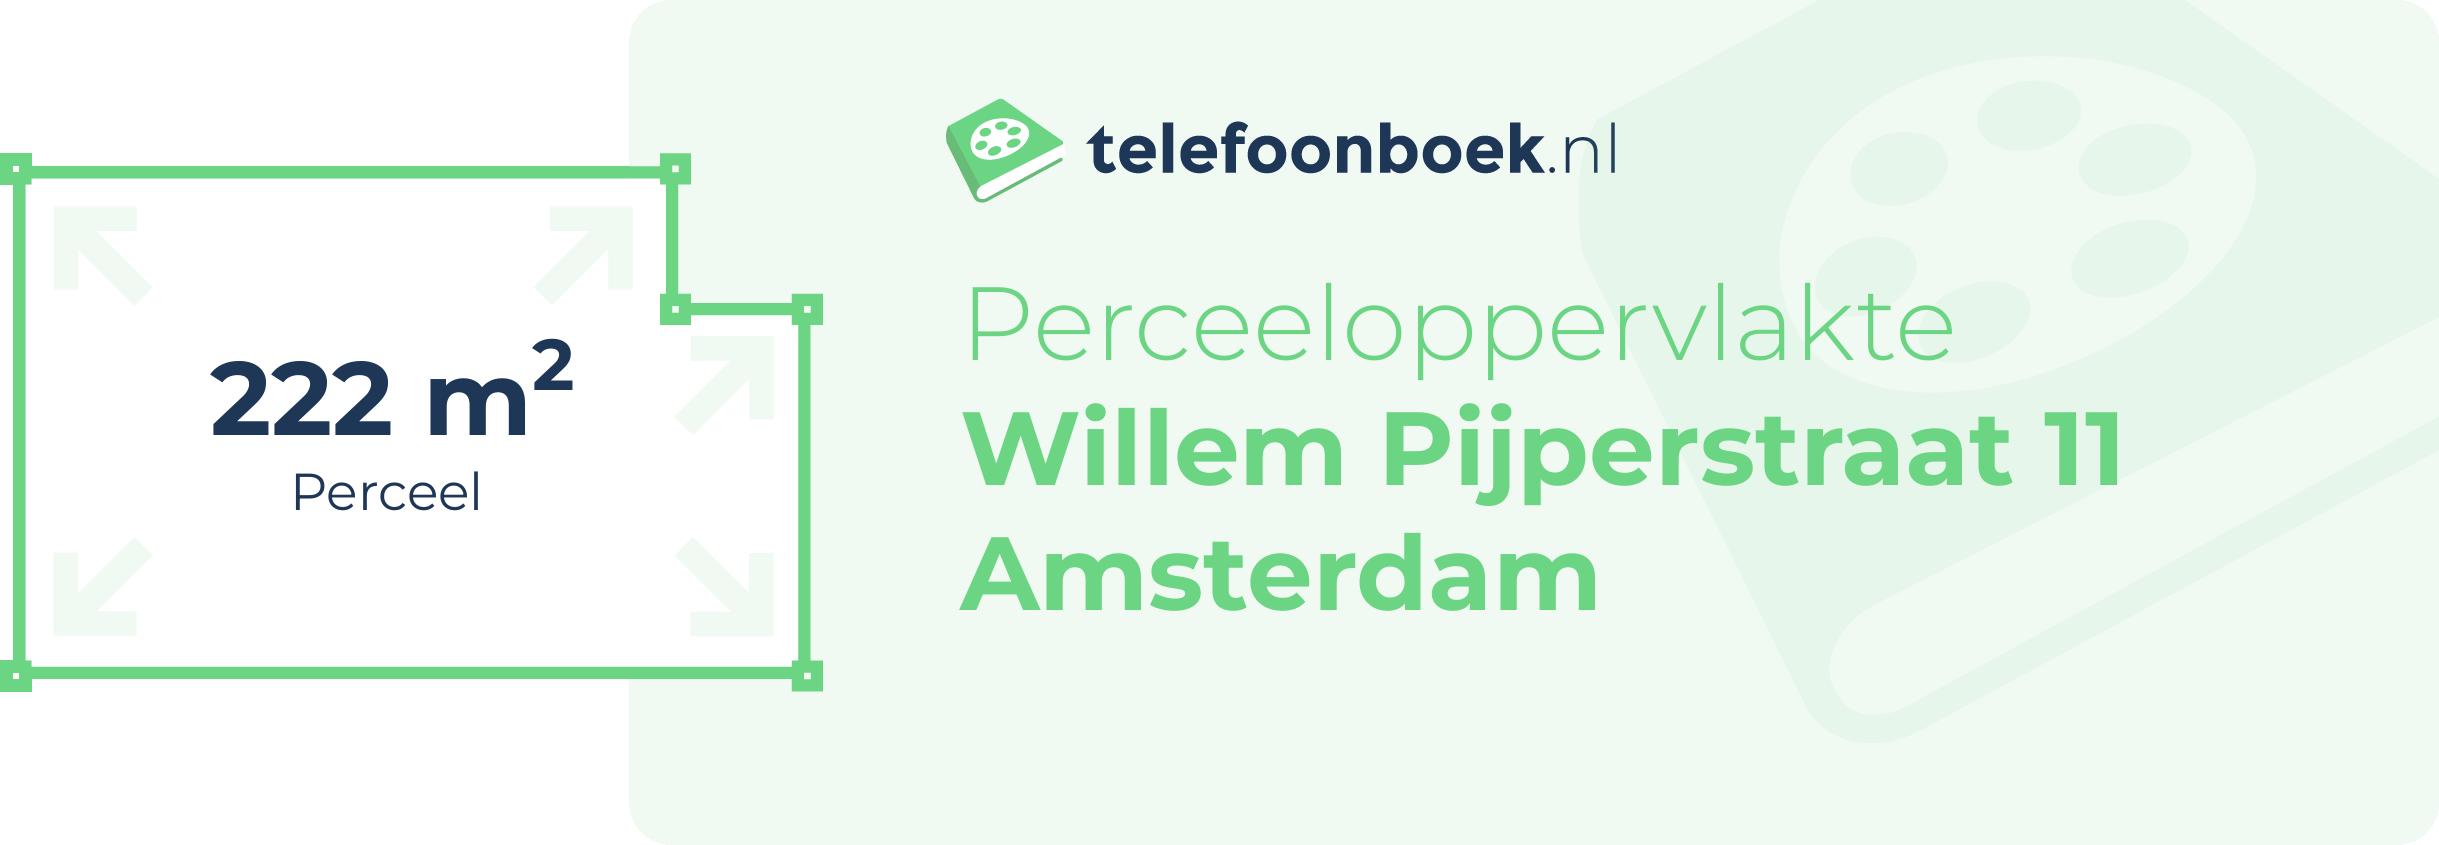 Perceeloppervlakte Willem Pijperstraat 11 Amsterdam